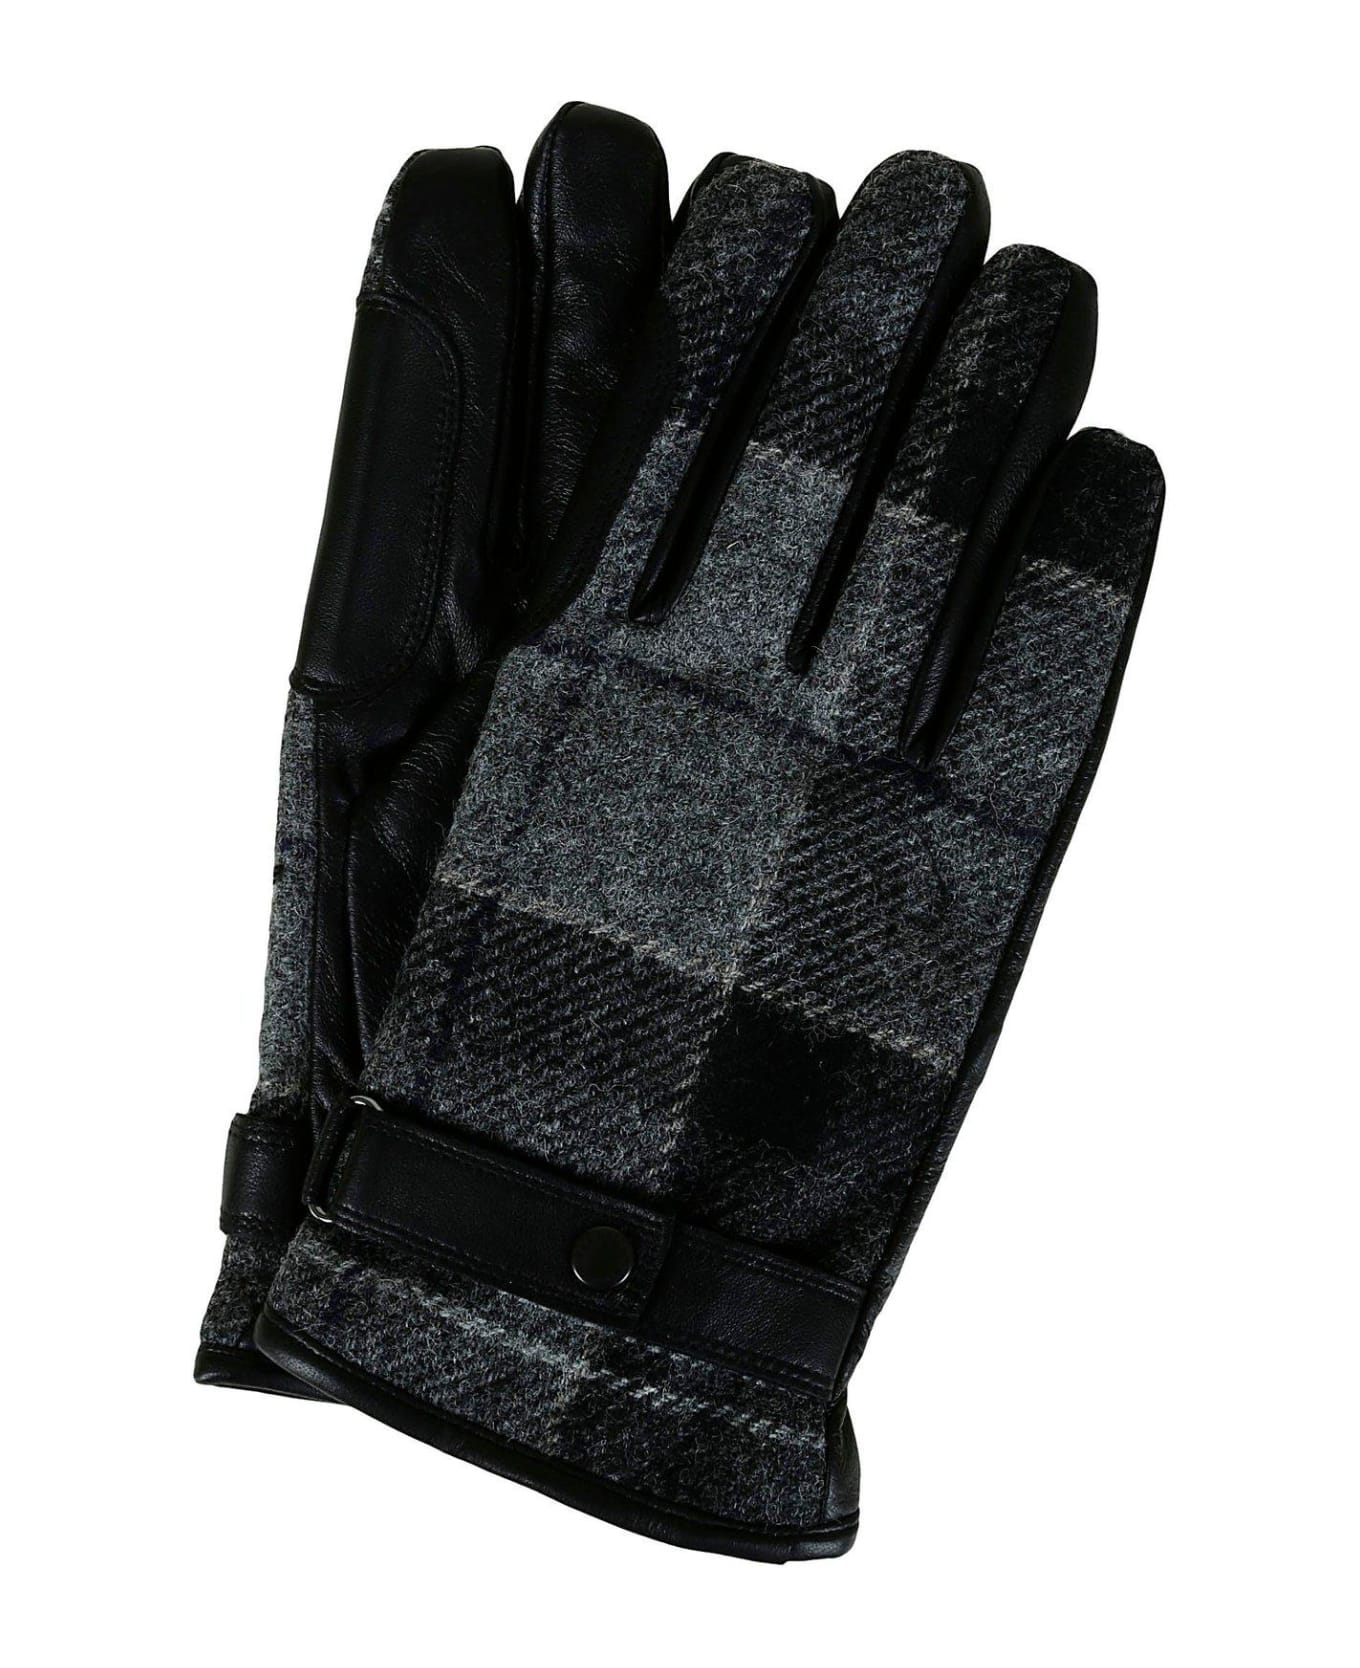 Barbour Newbrough Tartan Gloves - Black/grey